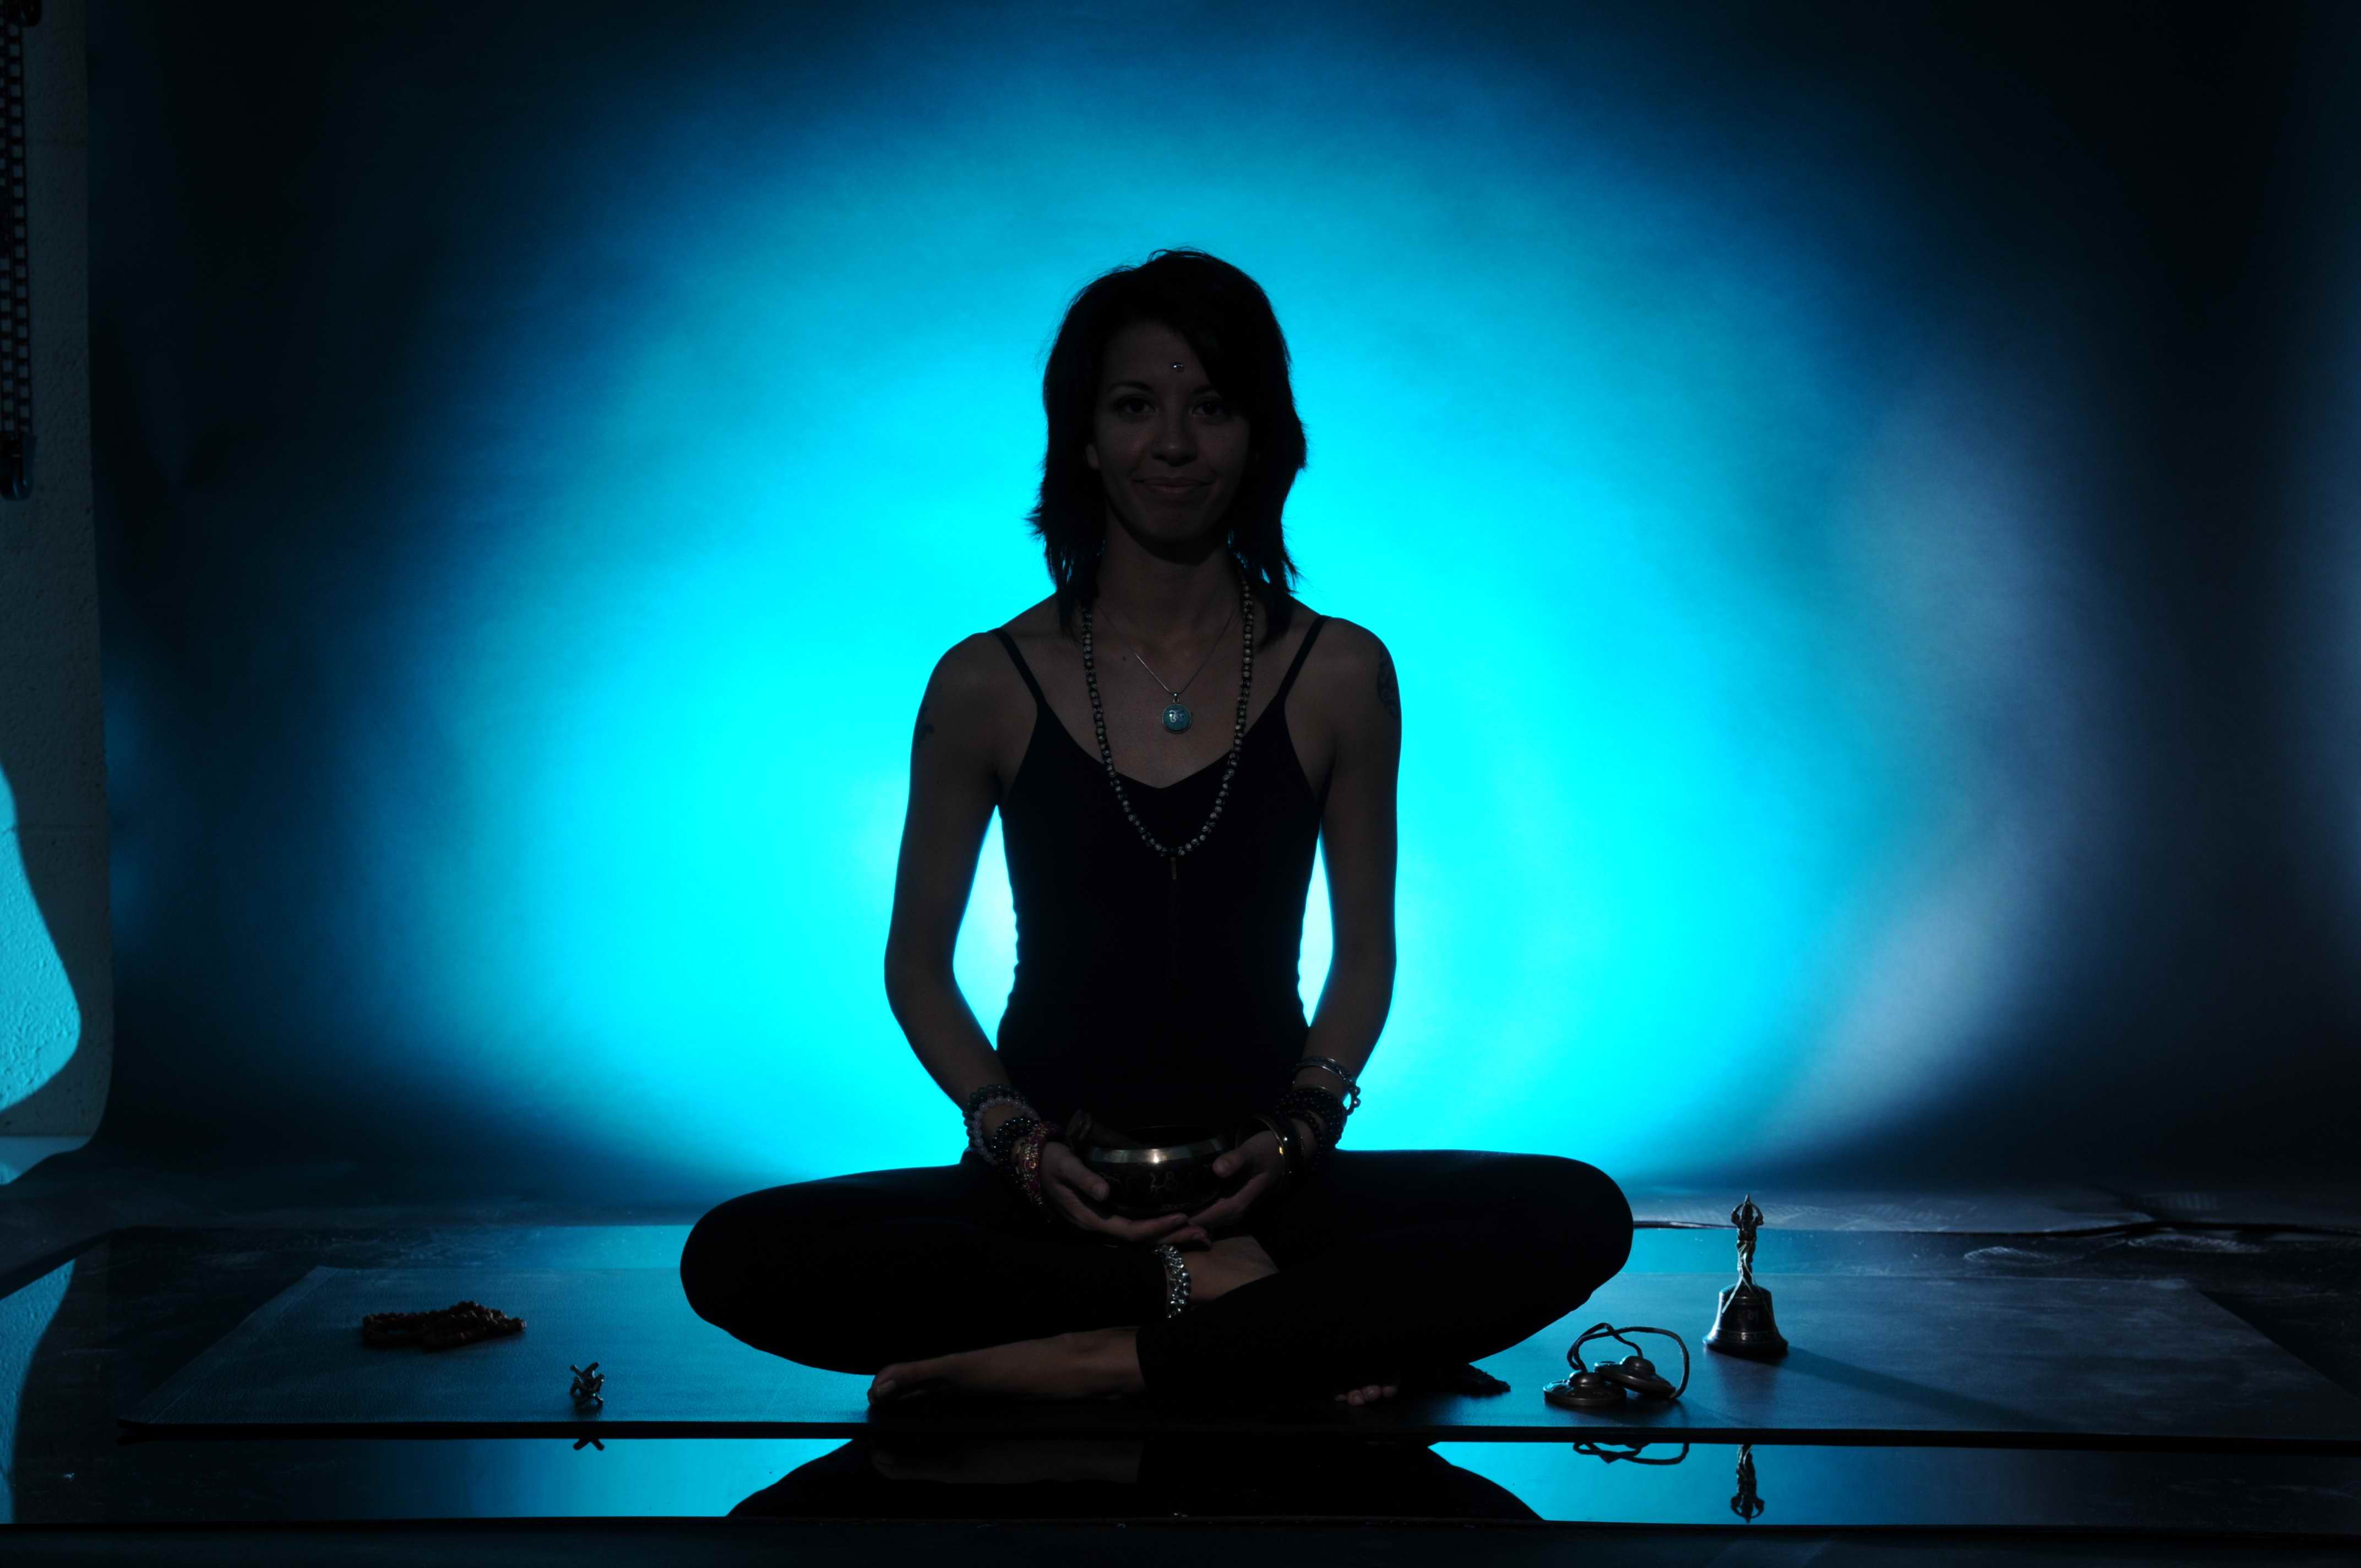 Meditation Pose Images - Free Download on Freepik